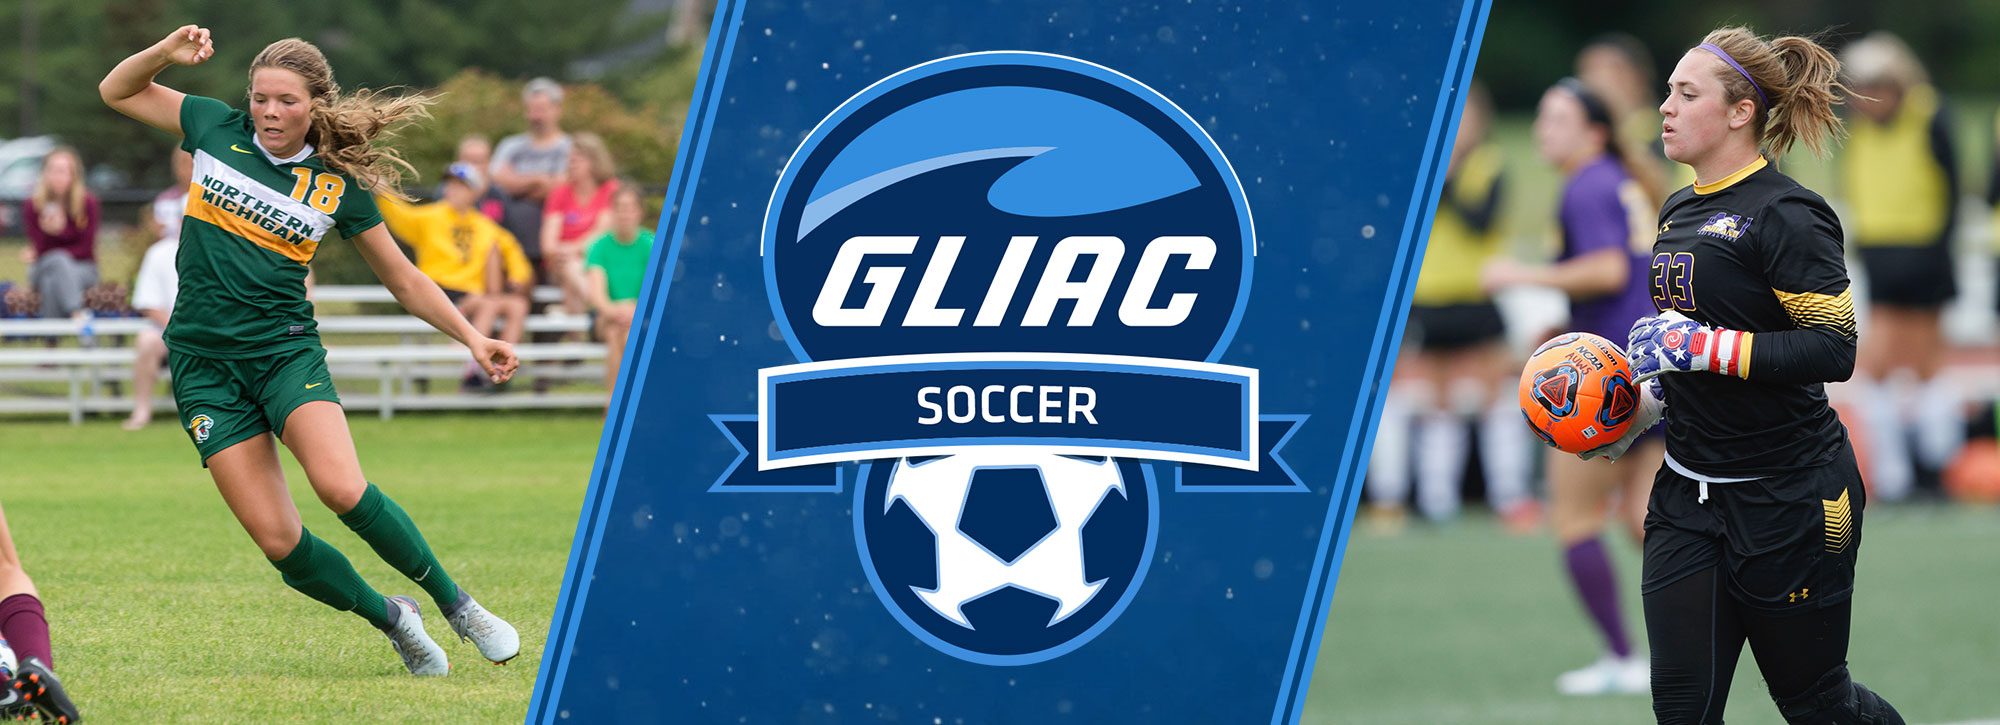 Northern Michigan's Halonen, Ashland's Lee Named GLIAC Women's Soccer Players of the Week